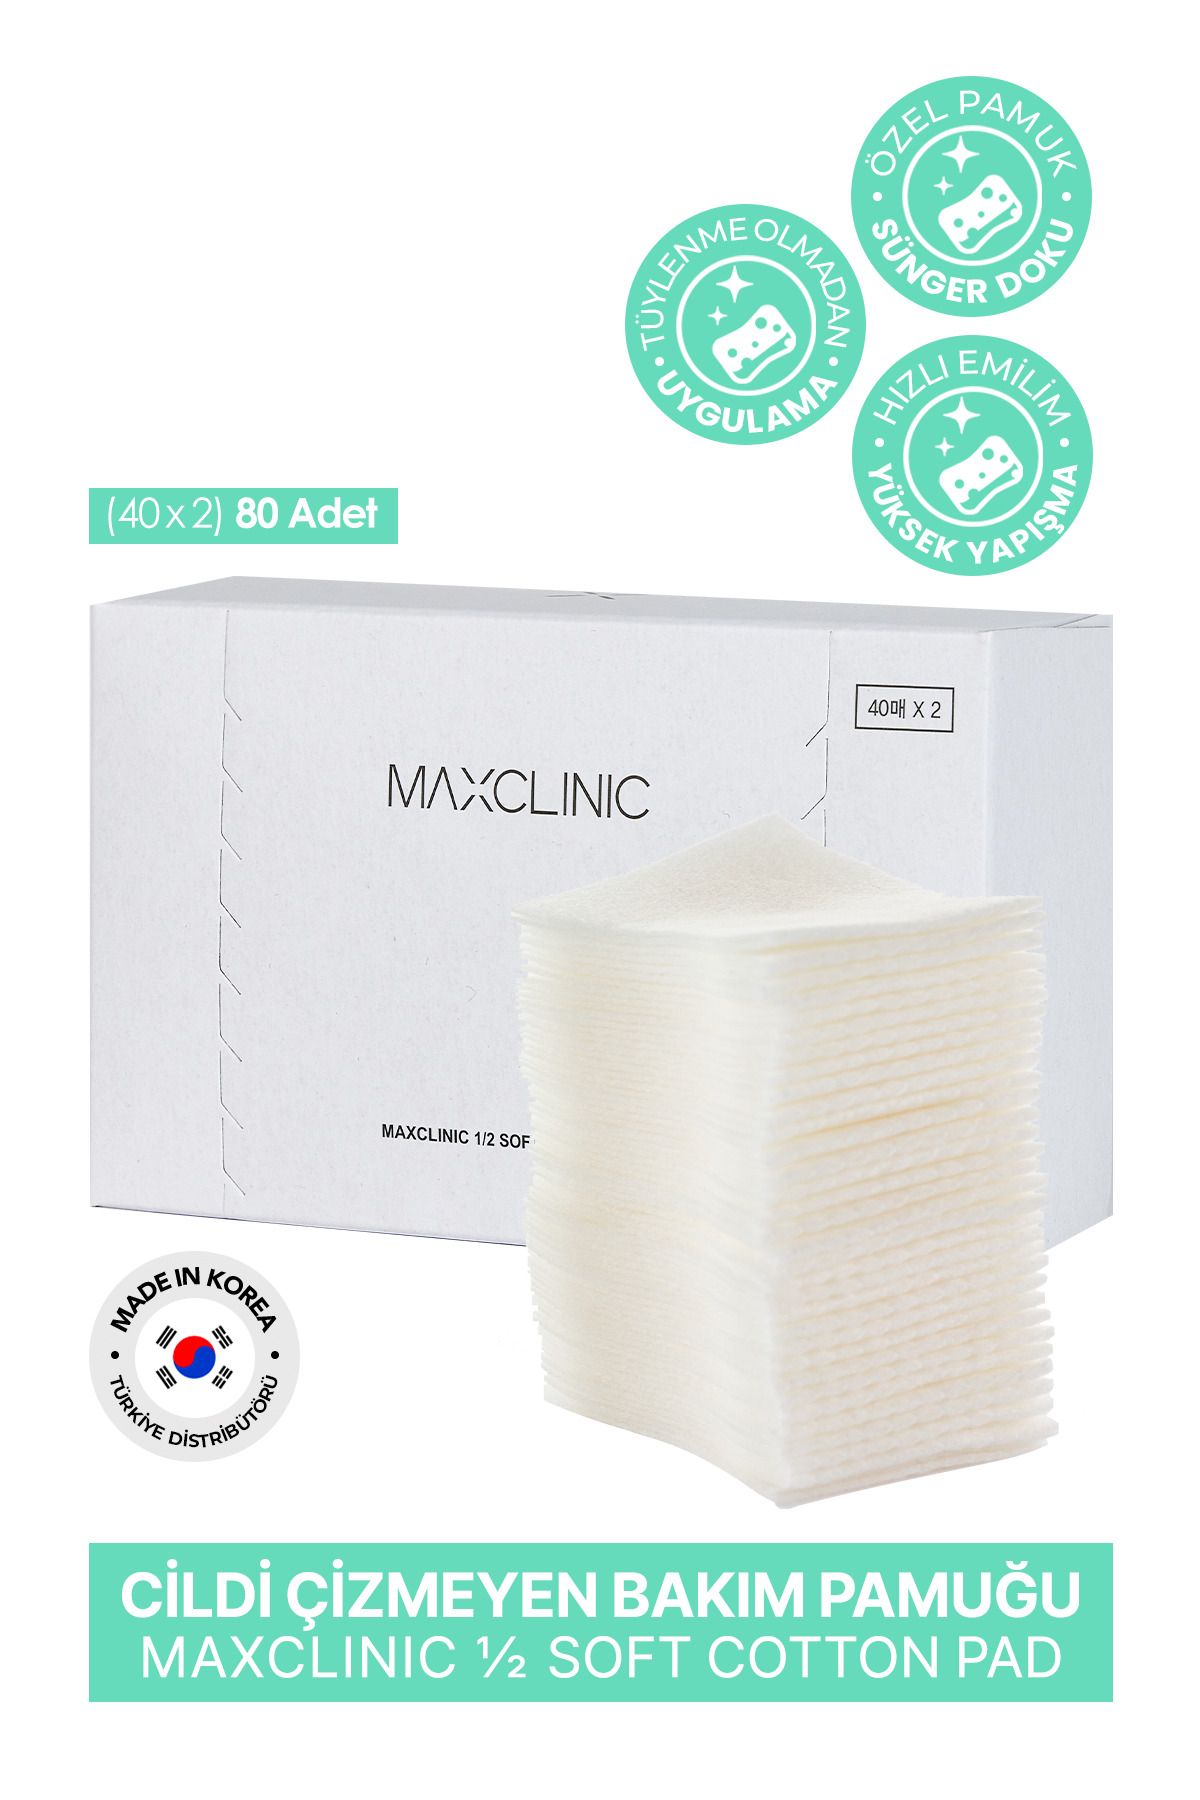 MAXCLINIC 1/2 Cilt Bakım Pamuğu Cildi Çizmeyen Tüylenmeyen Özel Sünger Doku Soft Cotton Pads 80adet